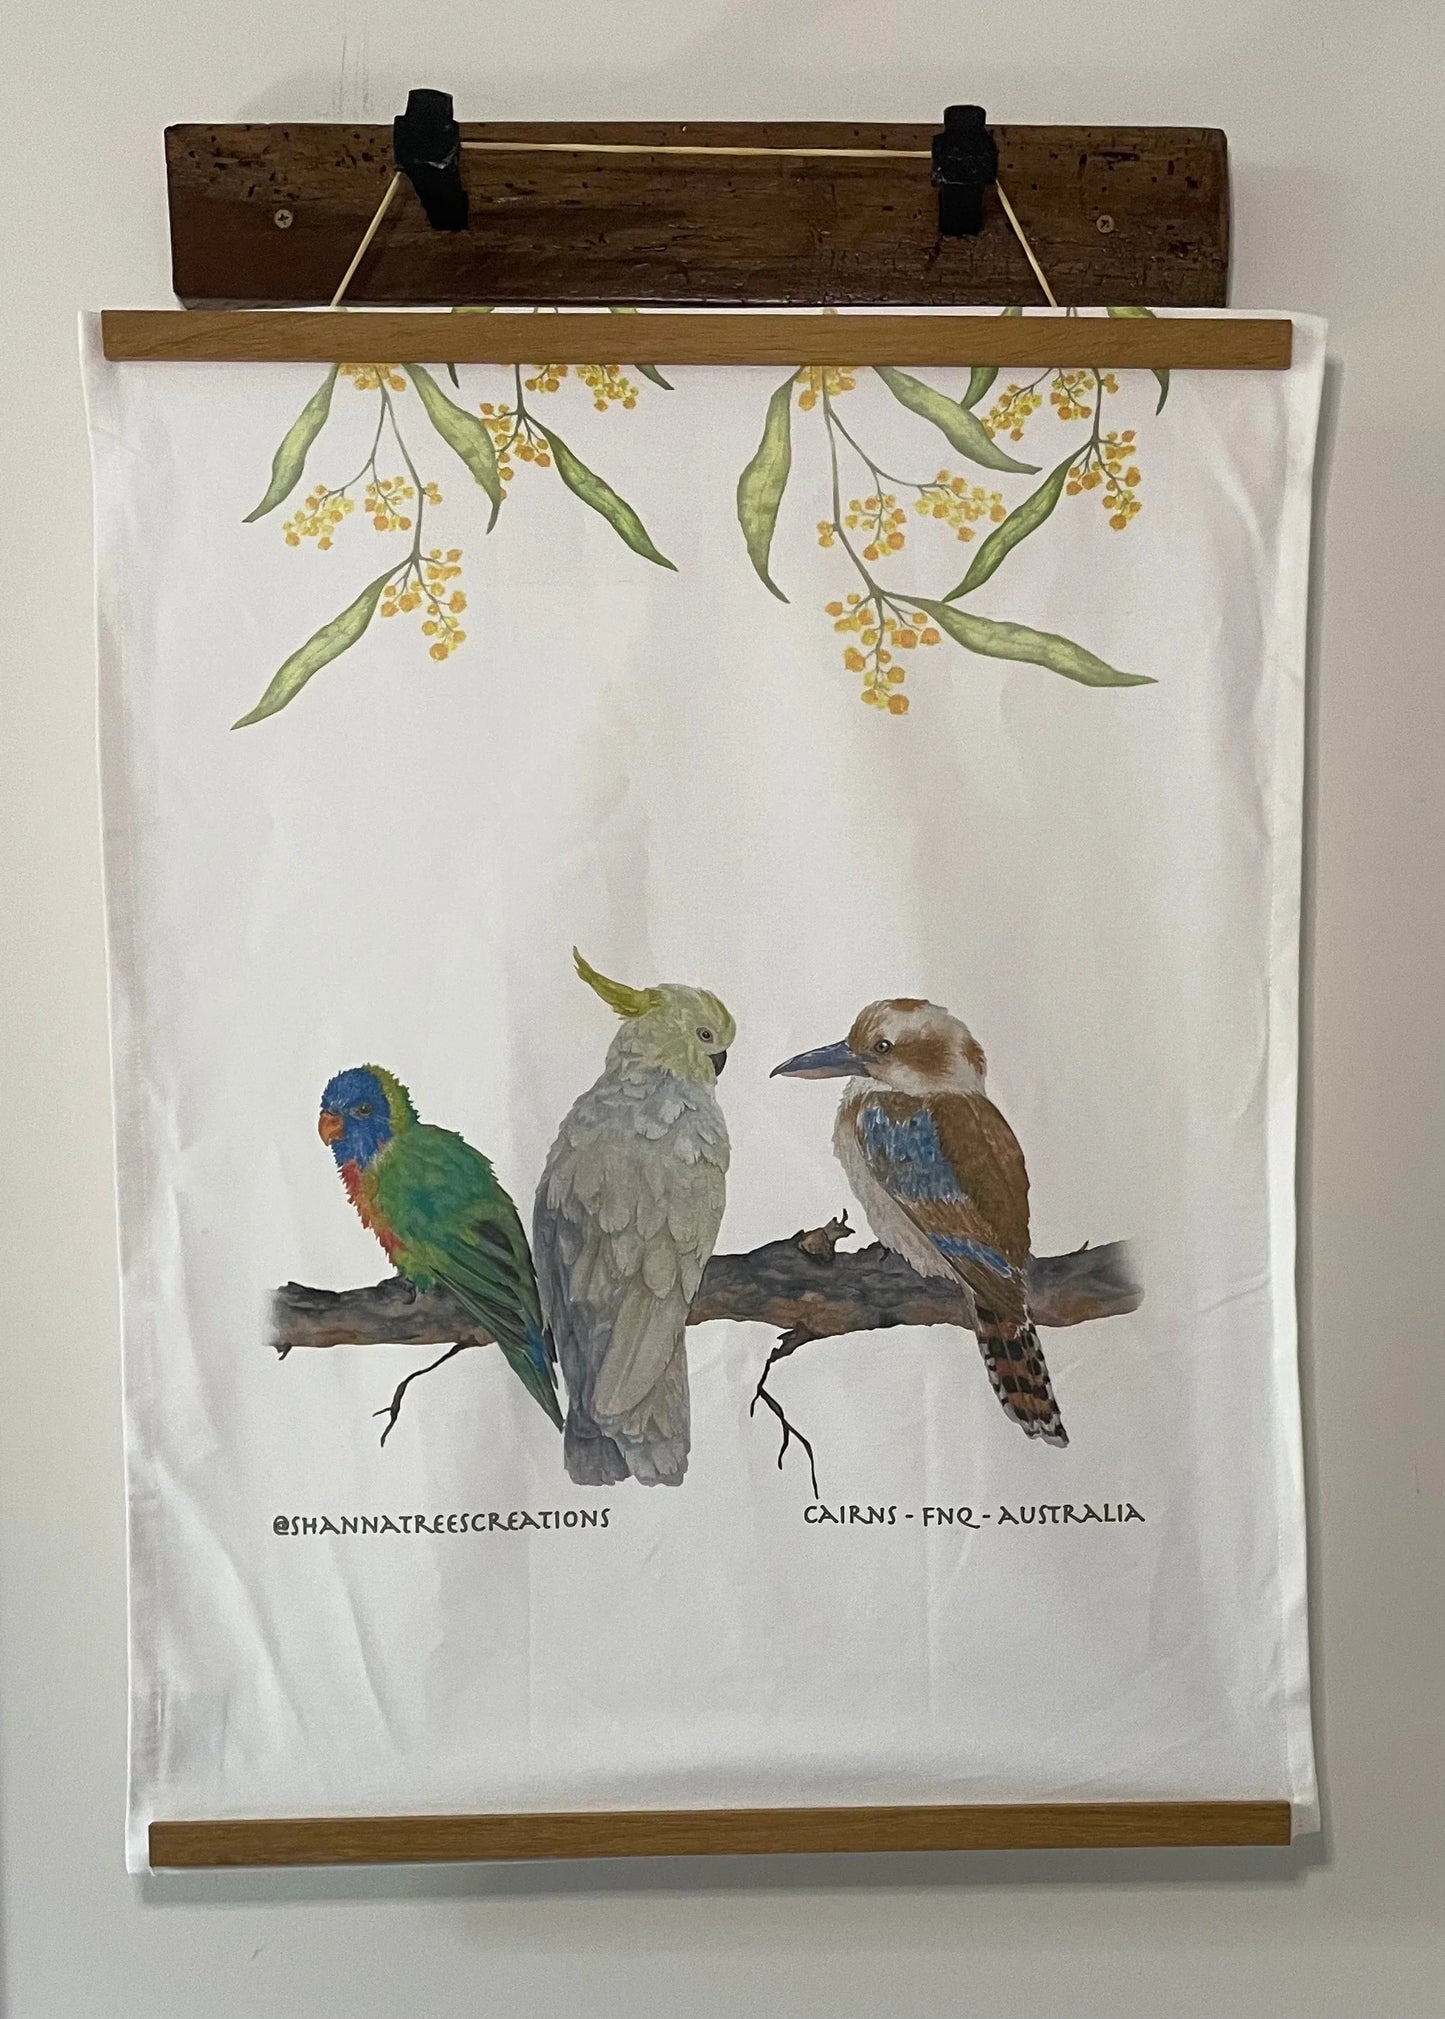 Shanna Trees Creations- "Trio of Birds" Cotton Tea Towel